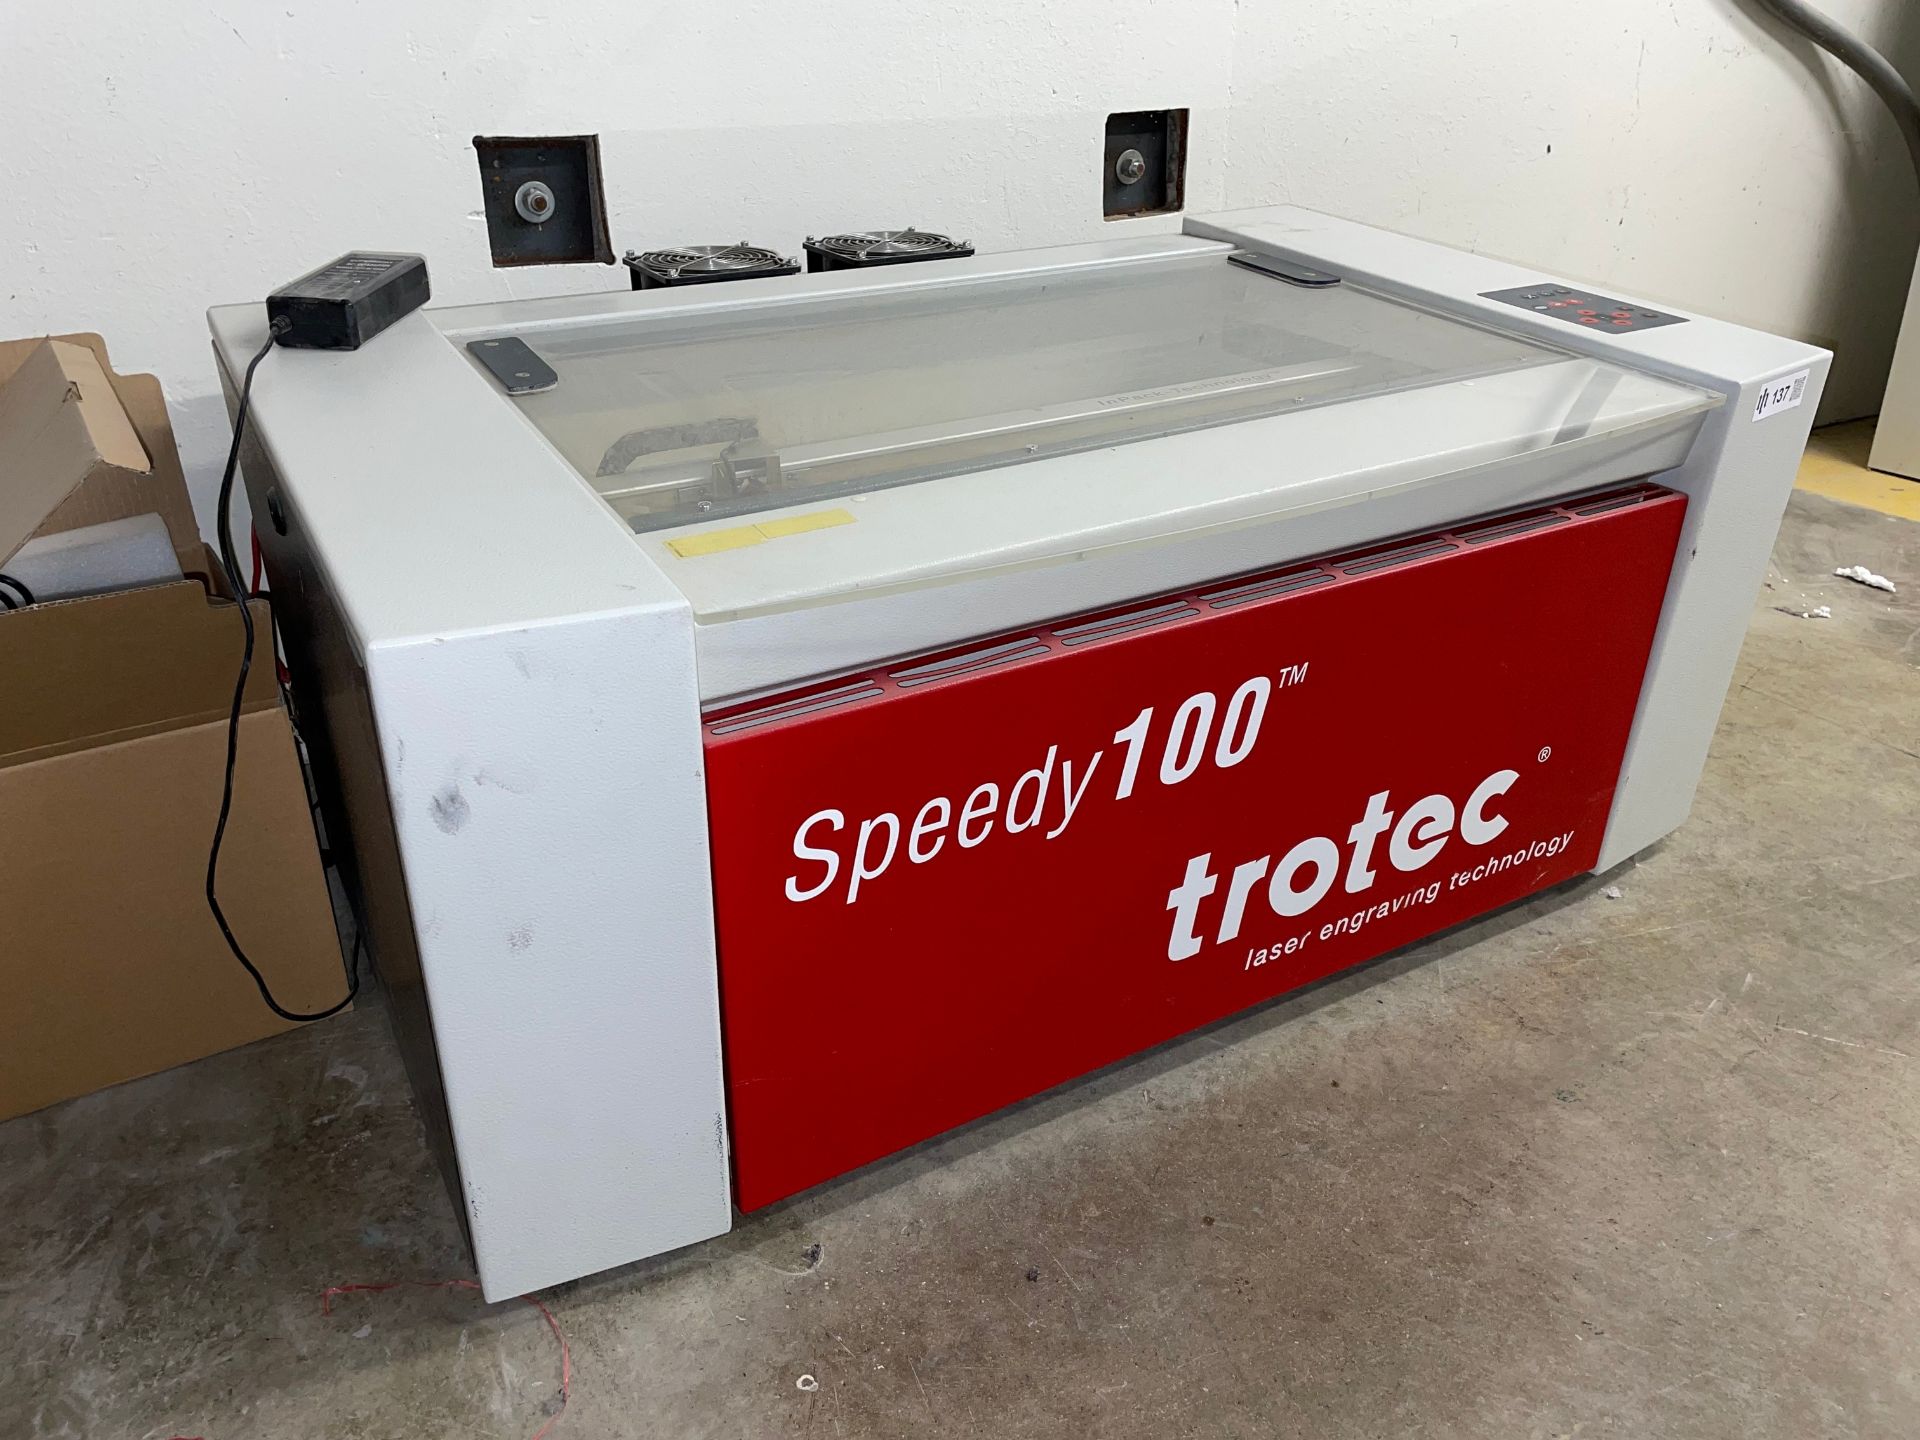 2006 - Trotec 8010 Speedy100 C30 Laser Engraver - Image 2 of 4